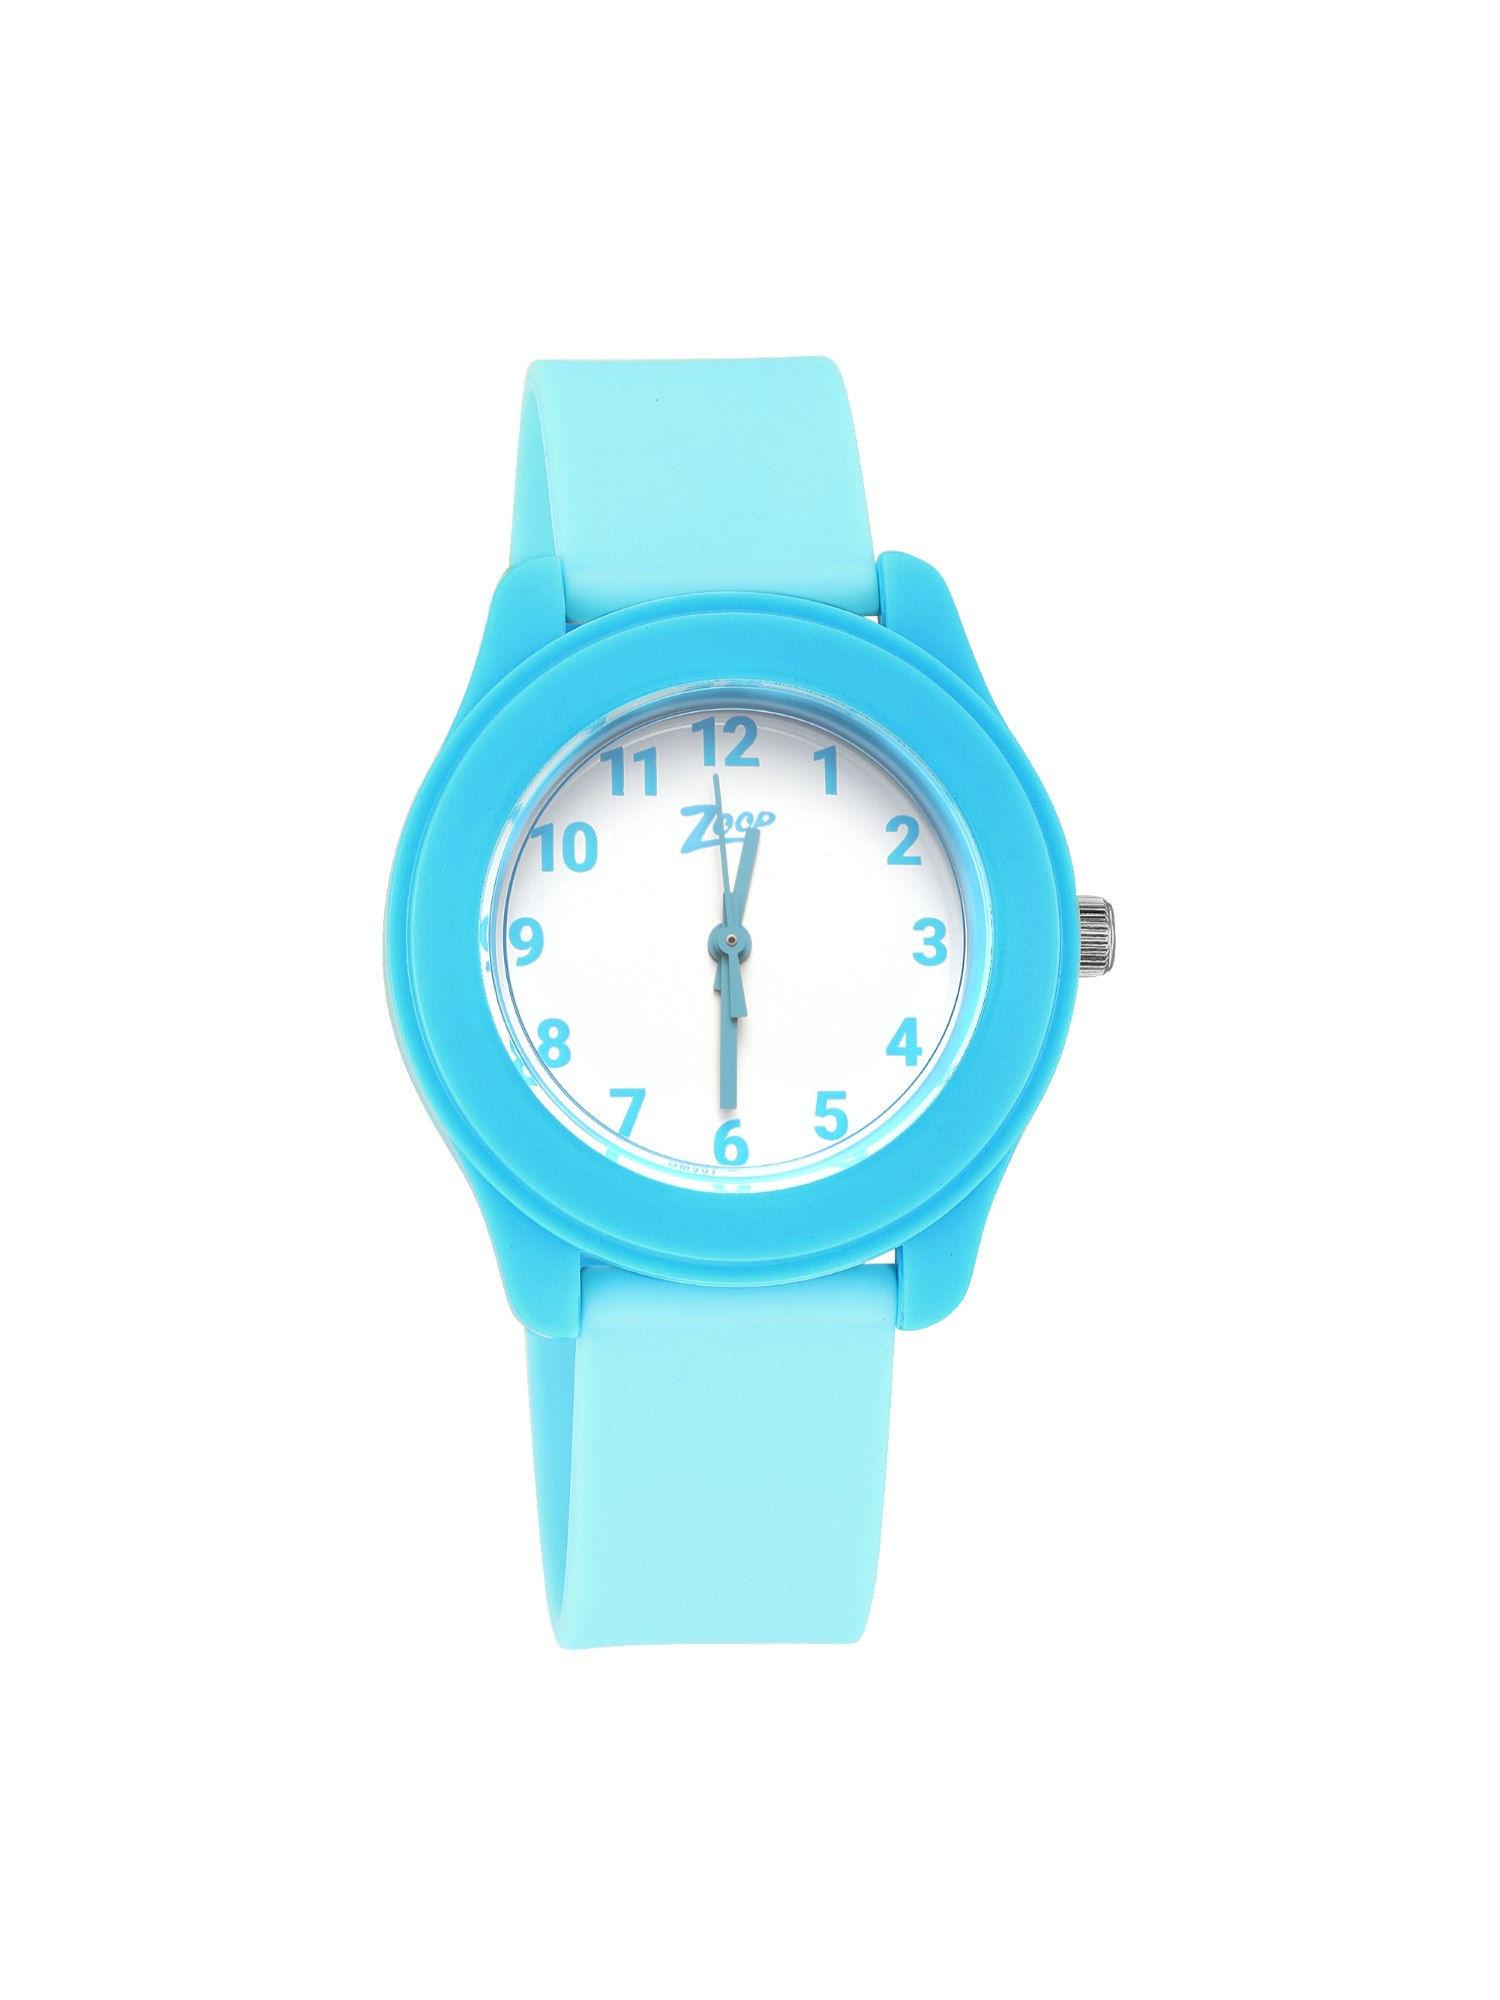 basics 26019pp14w white dial analog watch for kids